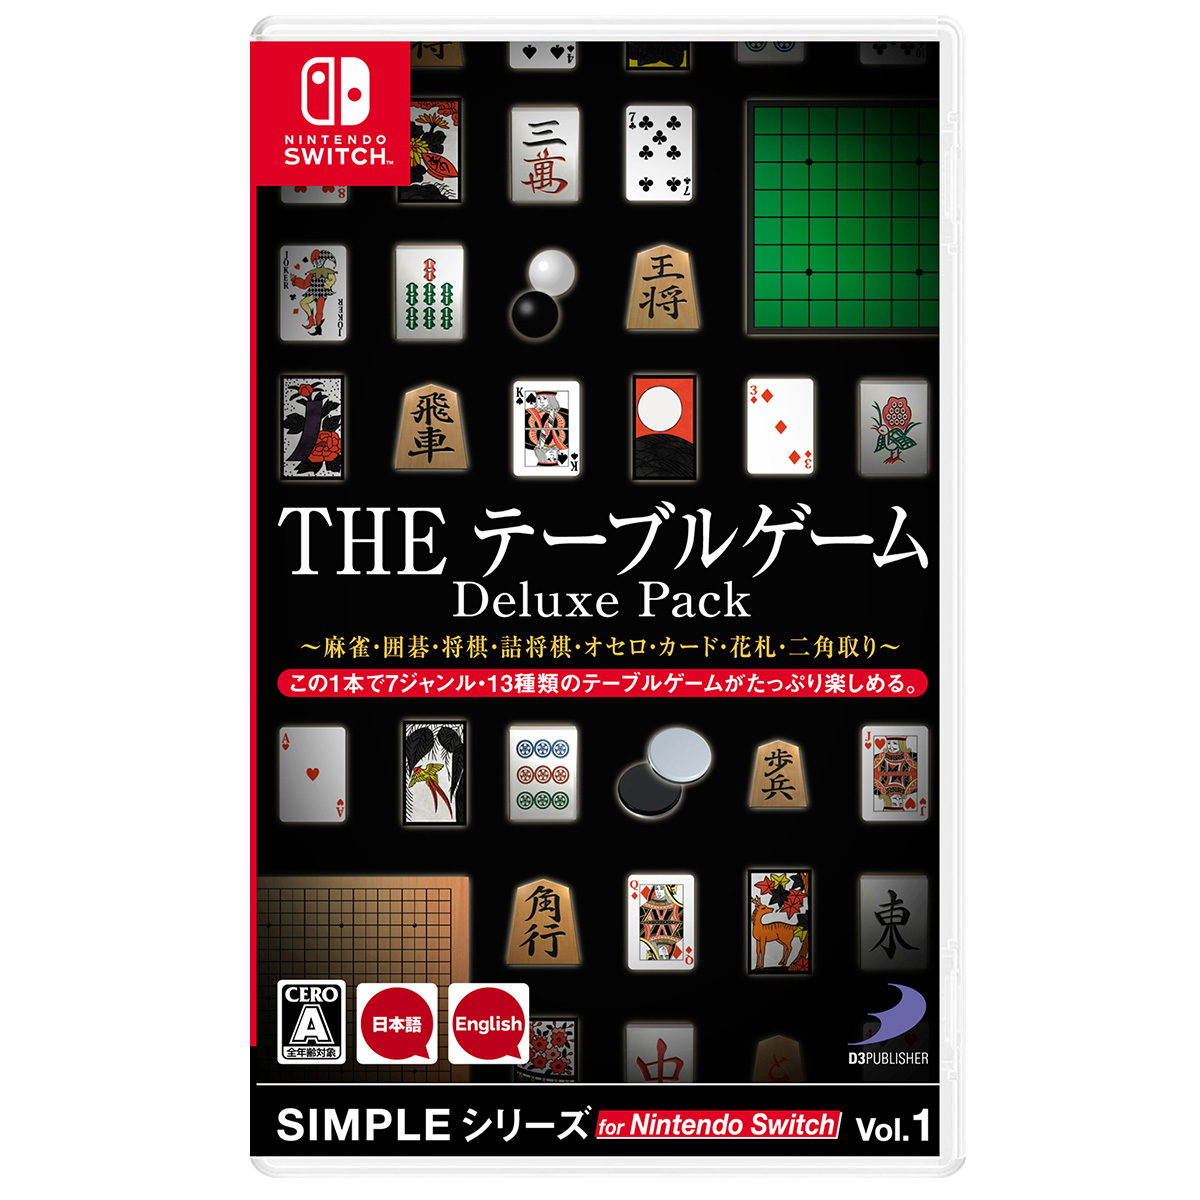 ［Switch］ SIMPLEシリーズ for Nintendo Switch Vol.1 THE テーブルゲーム Deluxe Pack 麻雀・囲碁・将棋・詰将棋・オセロ・カード・花札・二角取り